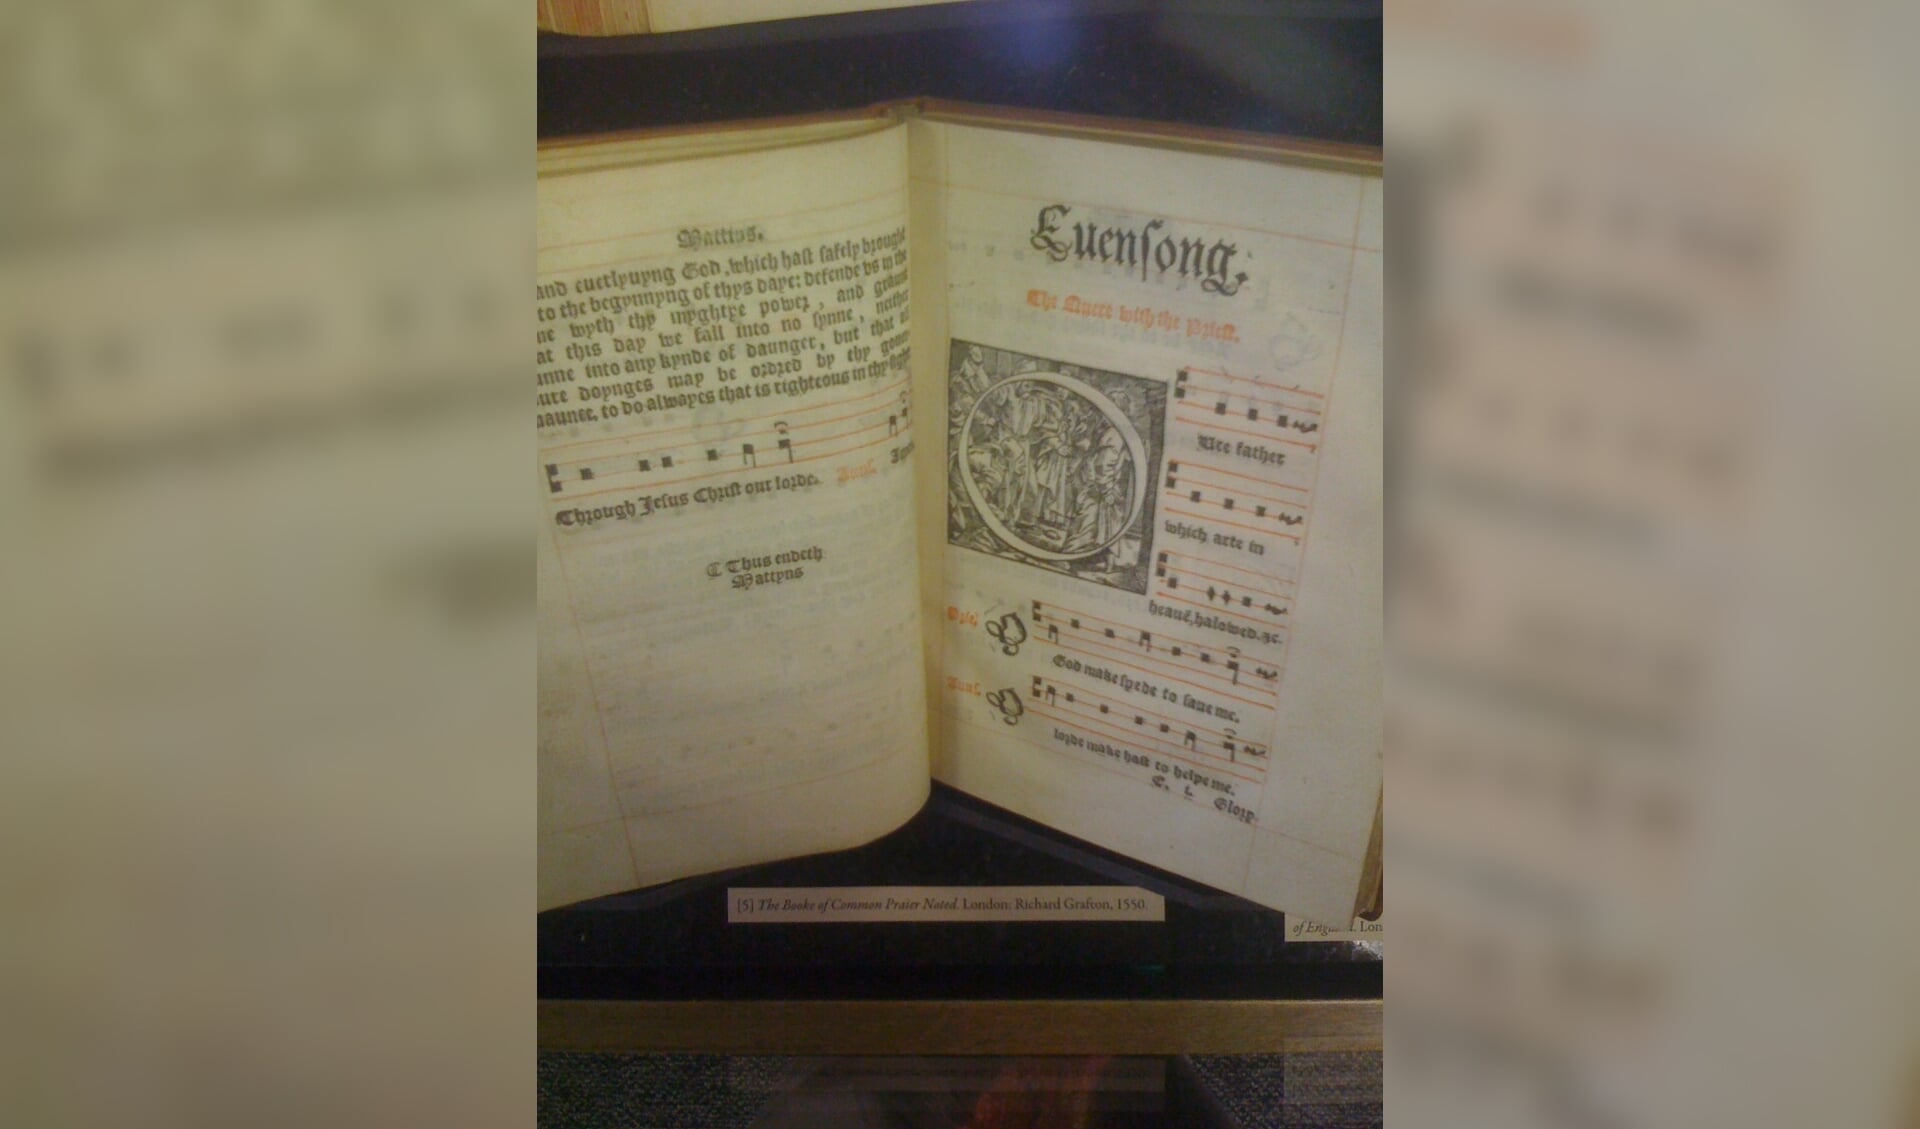 The Book of Common Prayer, Richard Grafton 1550, Londen